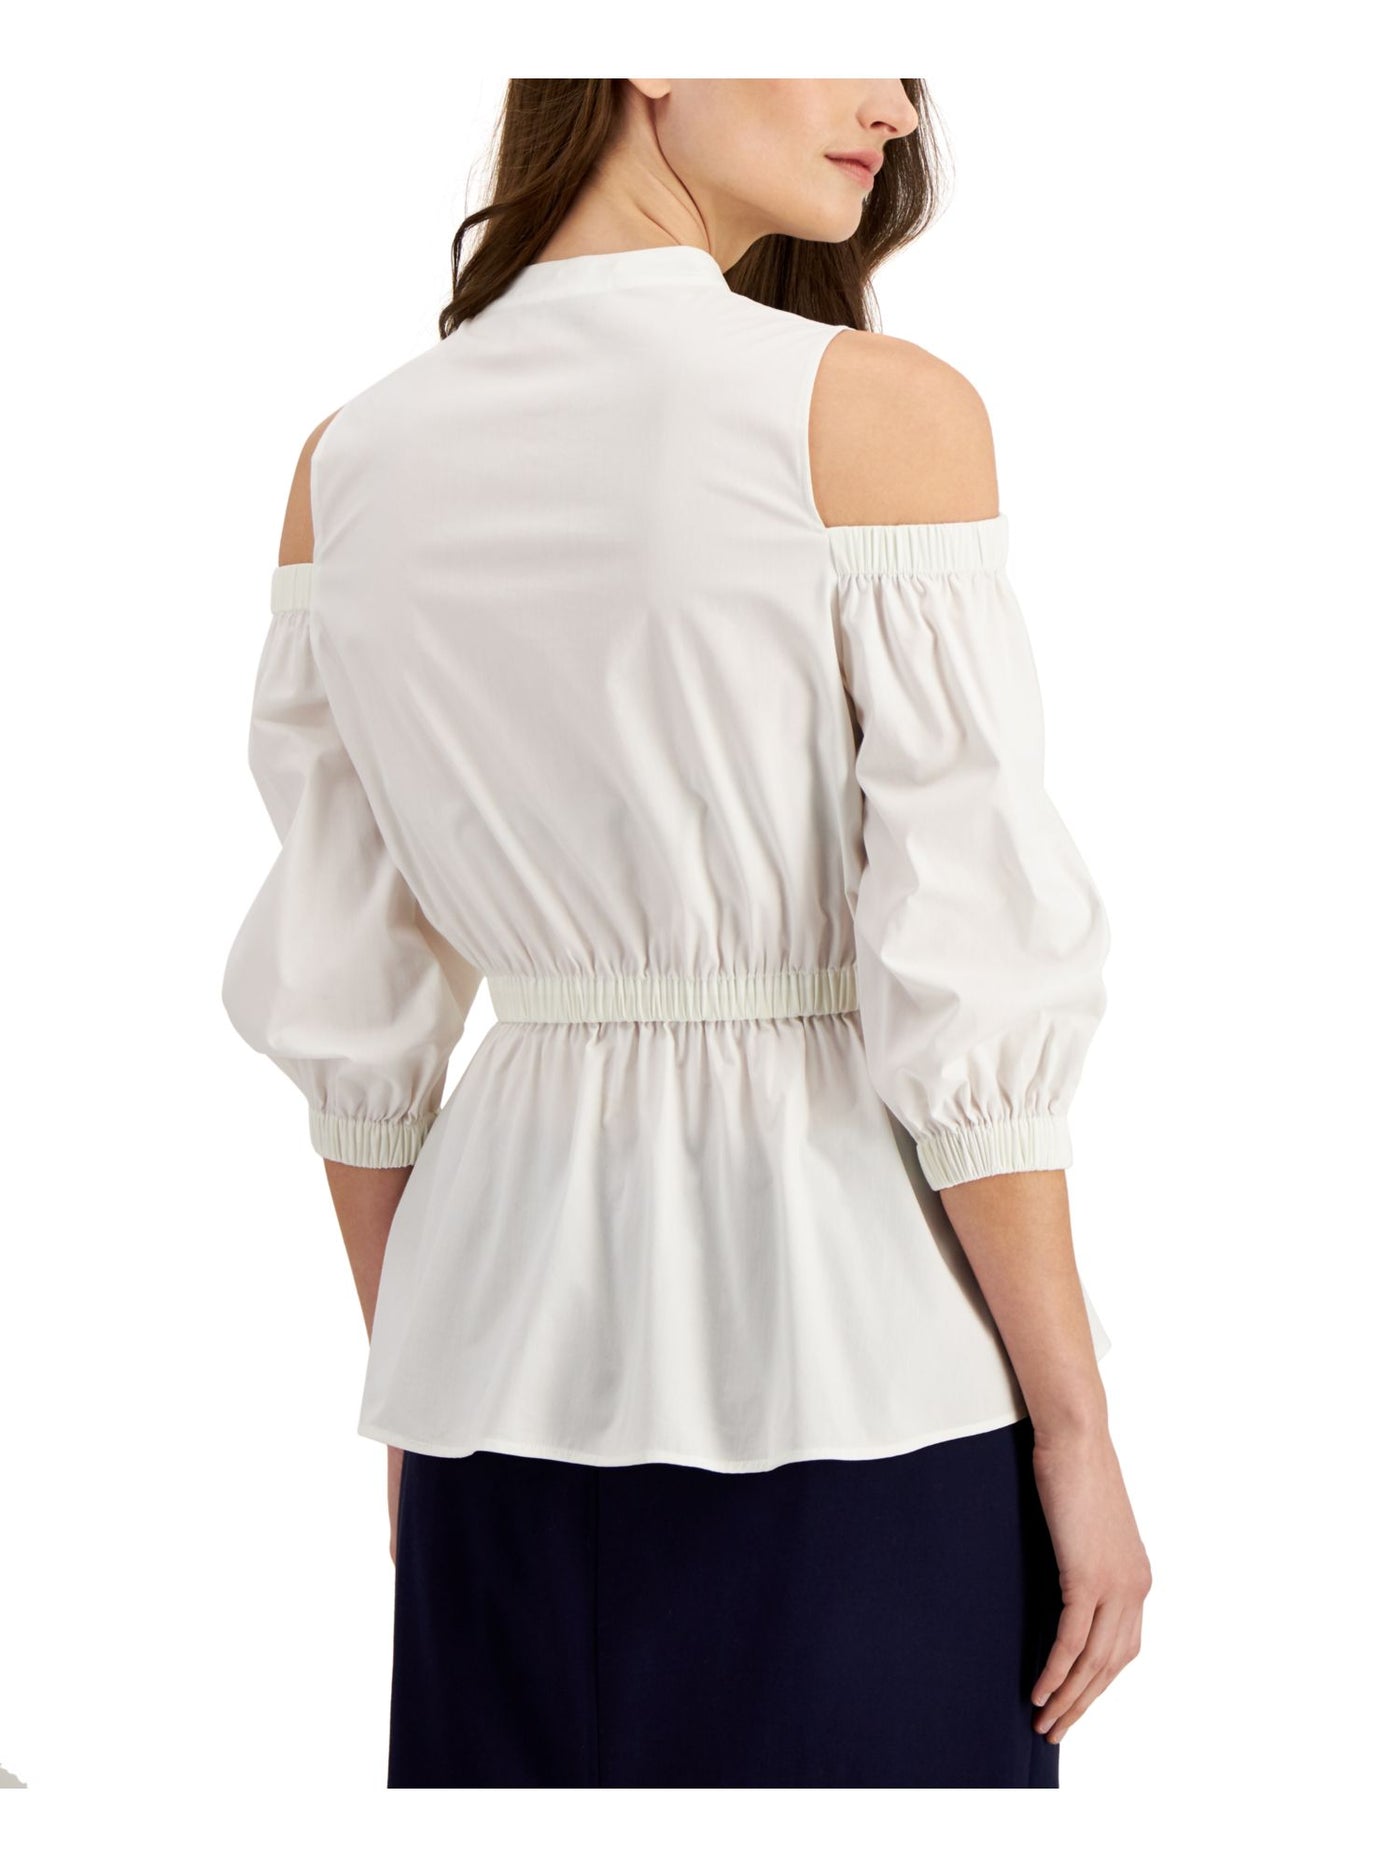 DONNA KARAN NEW YORK Womens White Cold Shoulder Sheer Unlined Pullover 3/4 Sleeve V Neck Peplum Top L